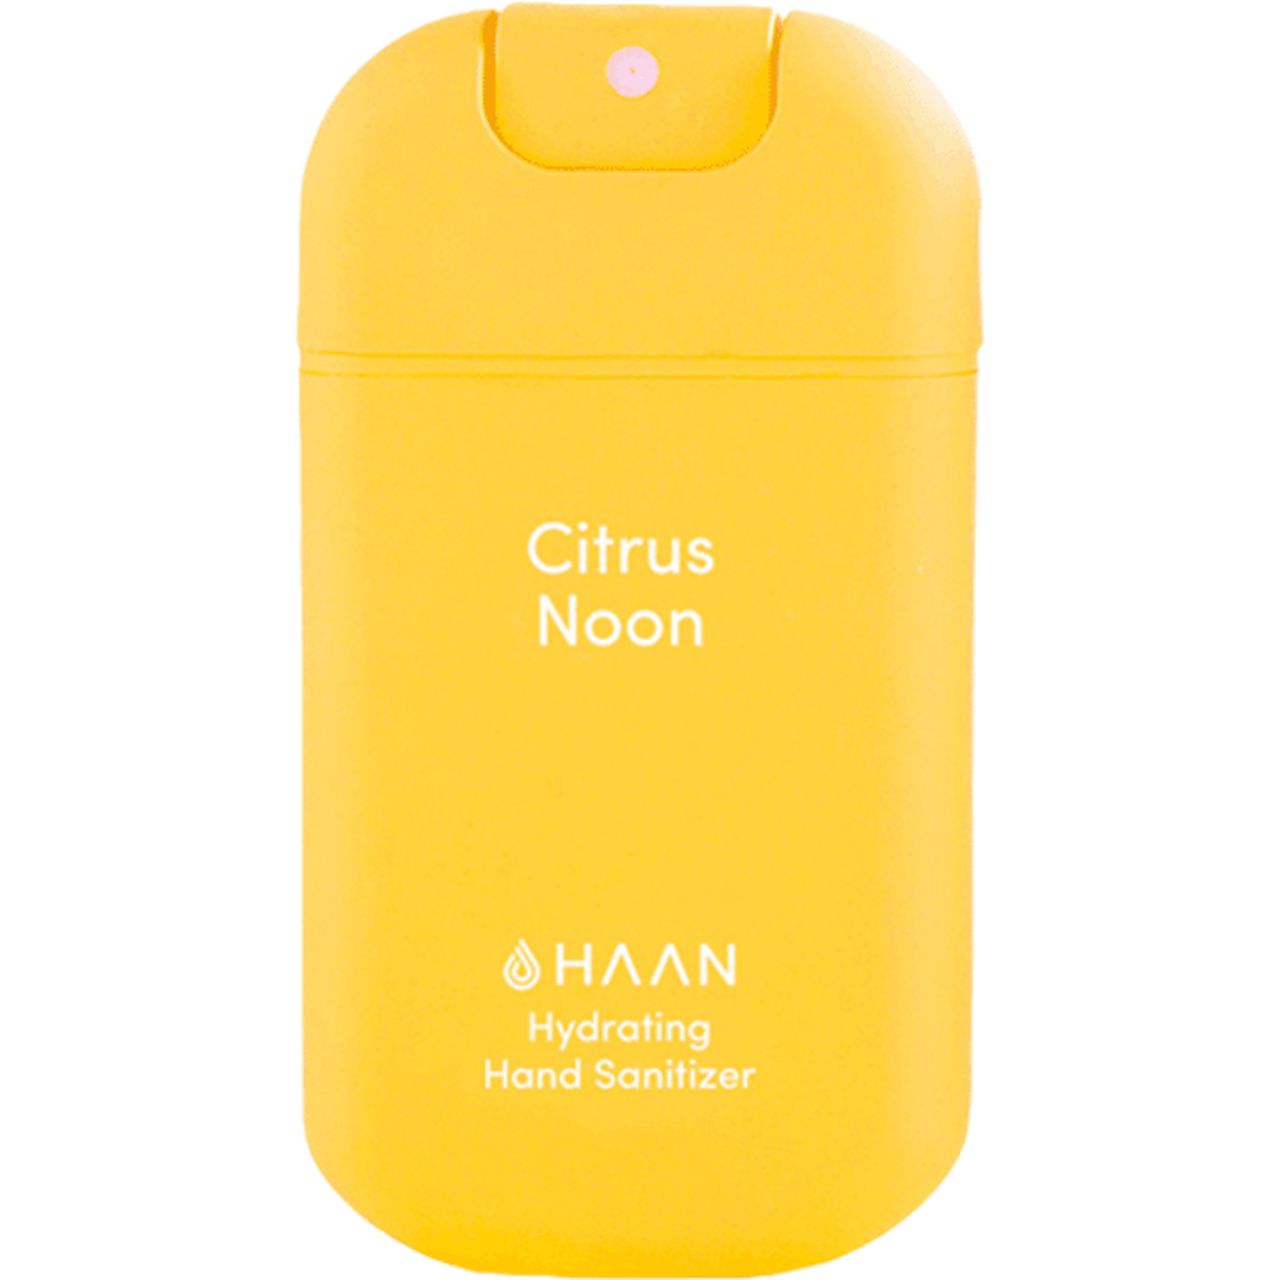 HAAN, Citrus Noon Hand Sanitizer Pocket